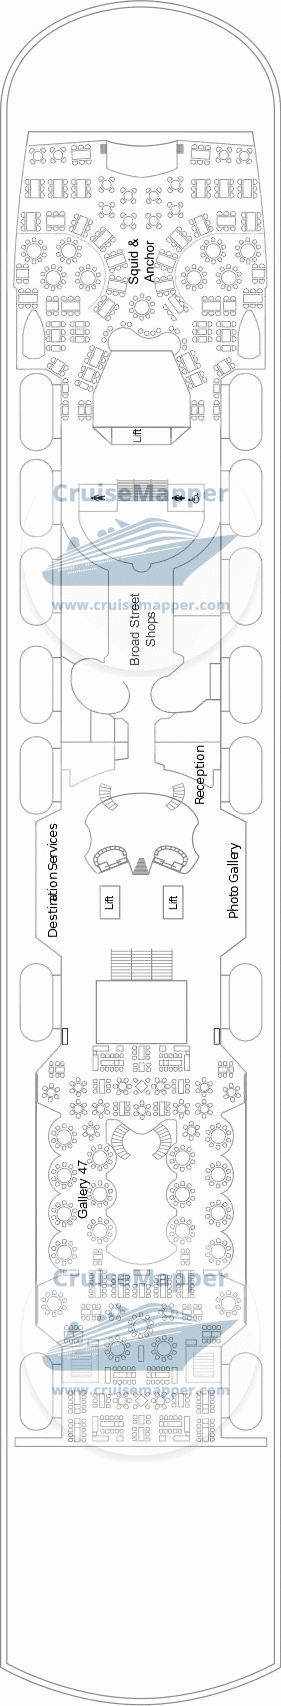 Marella Discovery 2 Deck Plan